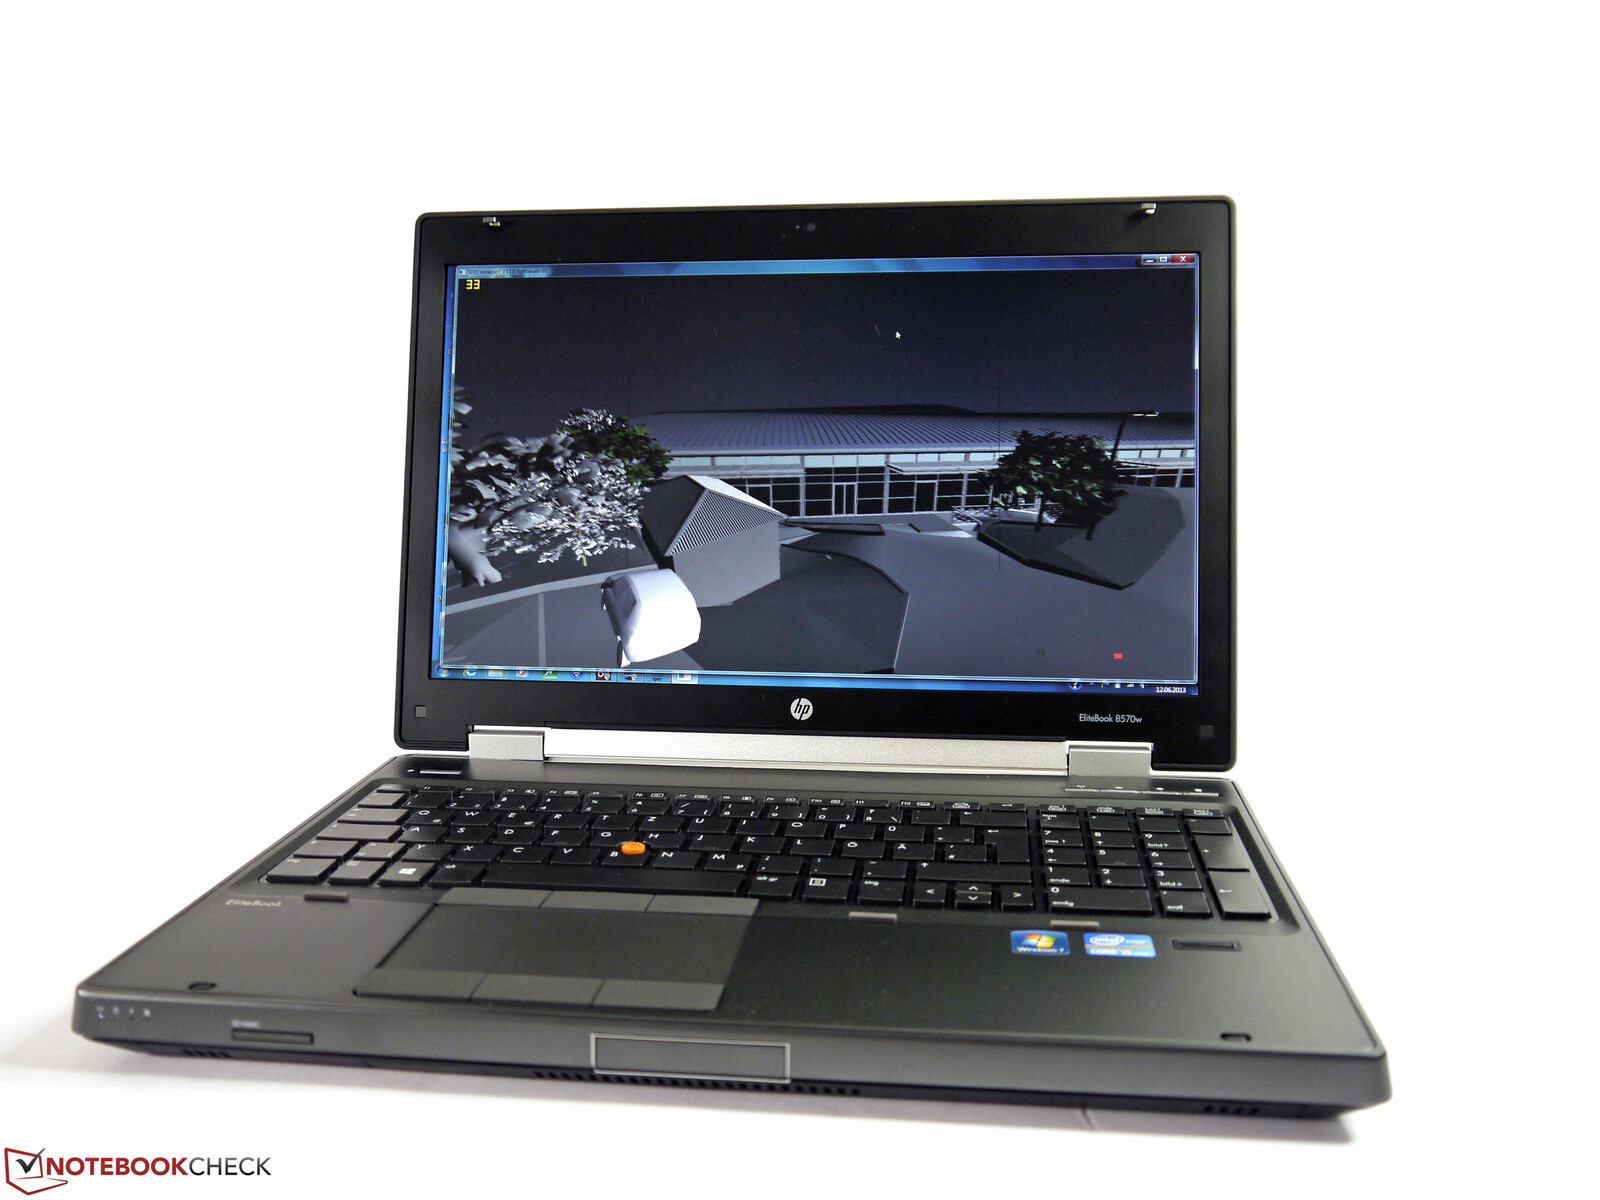 Laptop HP Elitebook 8570W - Intel Core i7-3630QM 2.4GHz, 8GB RAM, 500GB HDD, NVIDIA Quadro K1000M, 15.6 inch